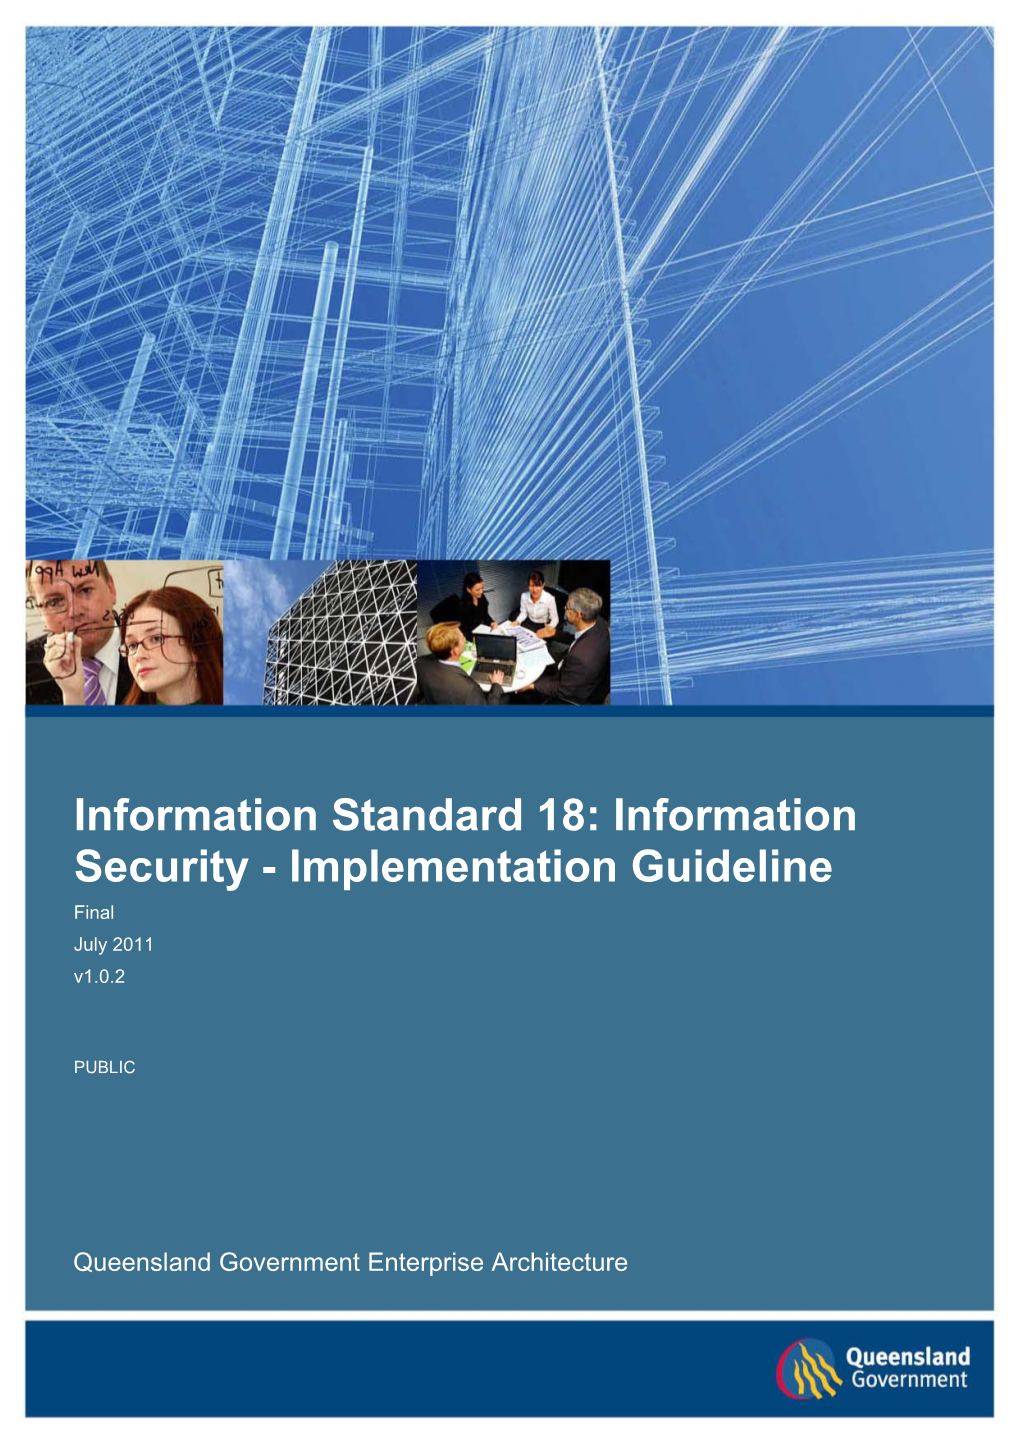 Information Standard 18: Information Security - Implementation Guideline